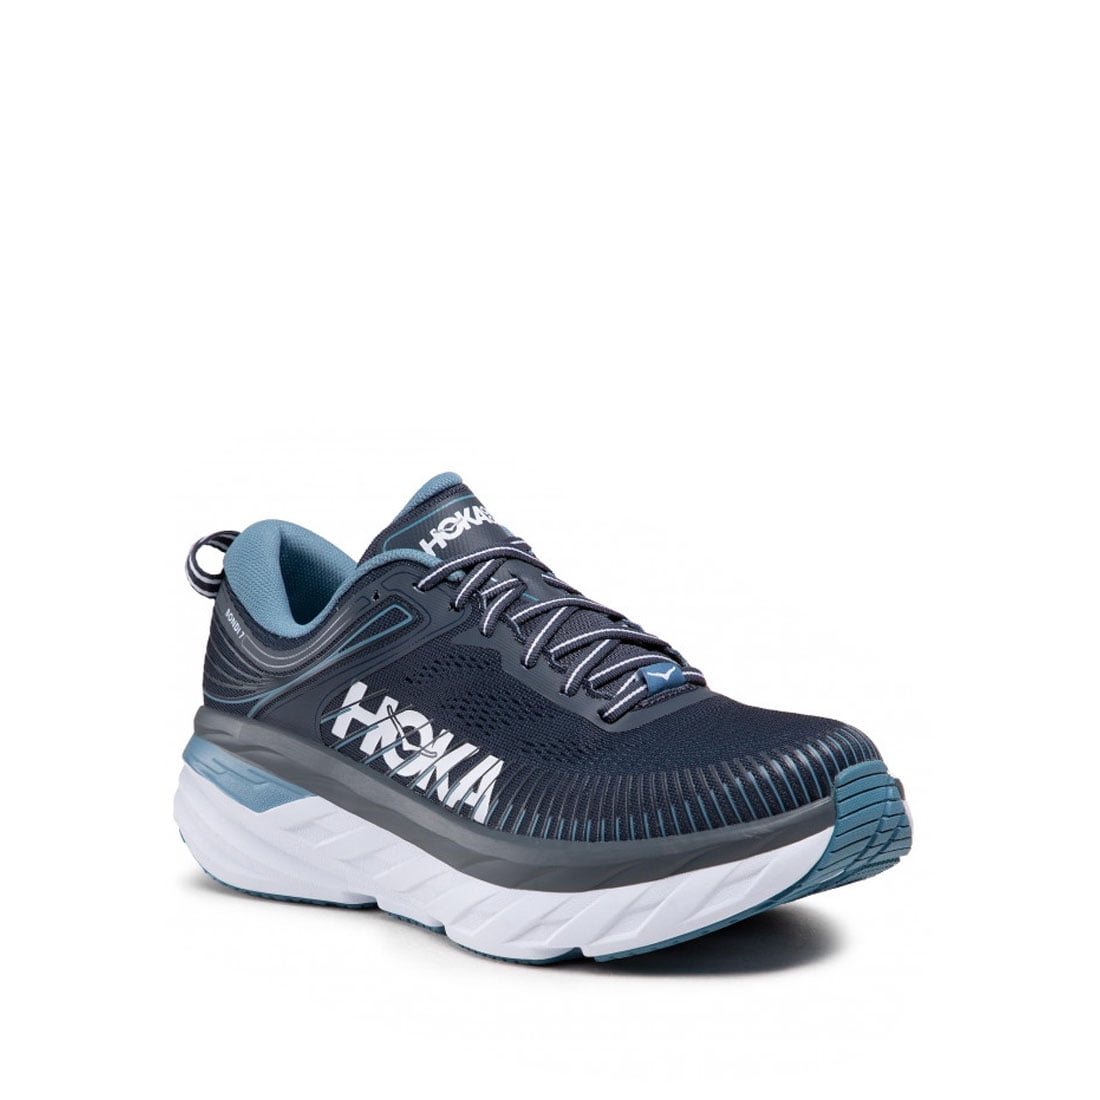 Sizes 8-13 Men's HOKA ONE ONE Bondi 7 Blue/Ombre Blue Running Shoes